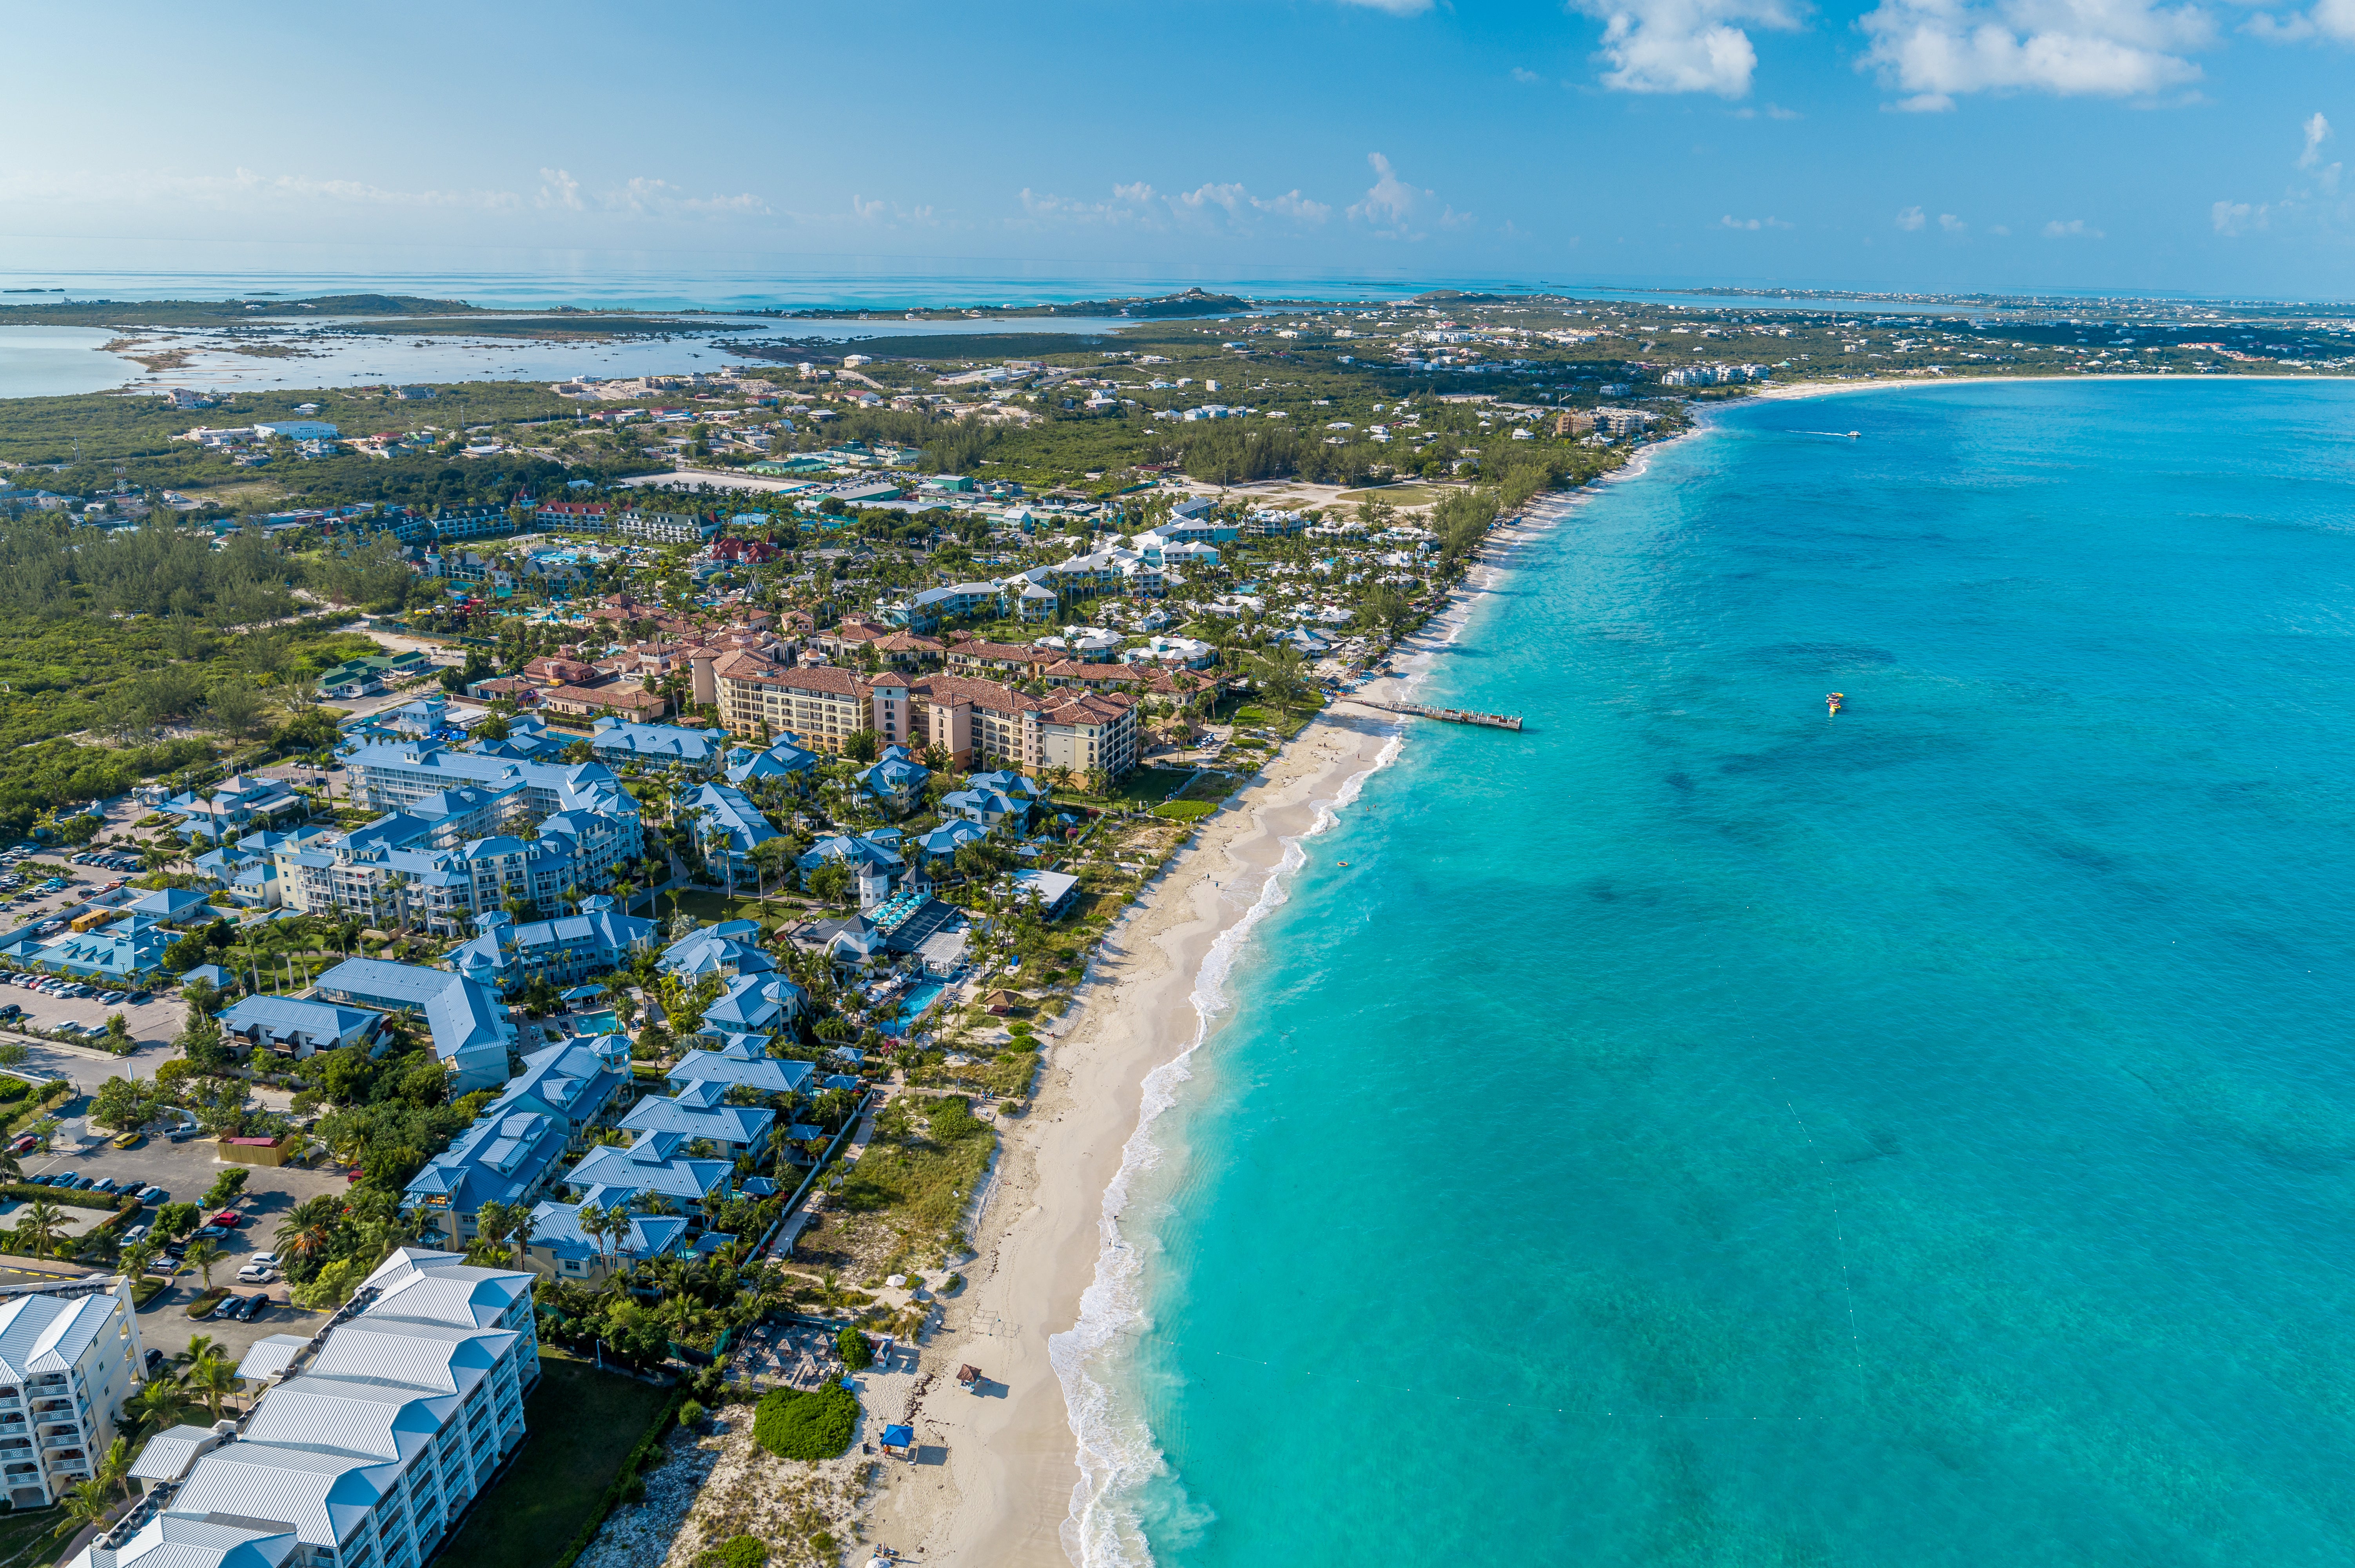 The sprawling Beaches Turks & Caicos from the air